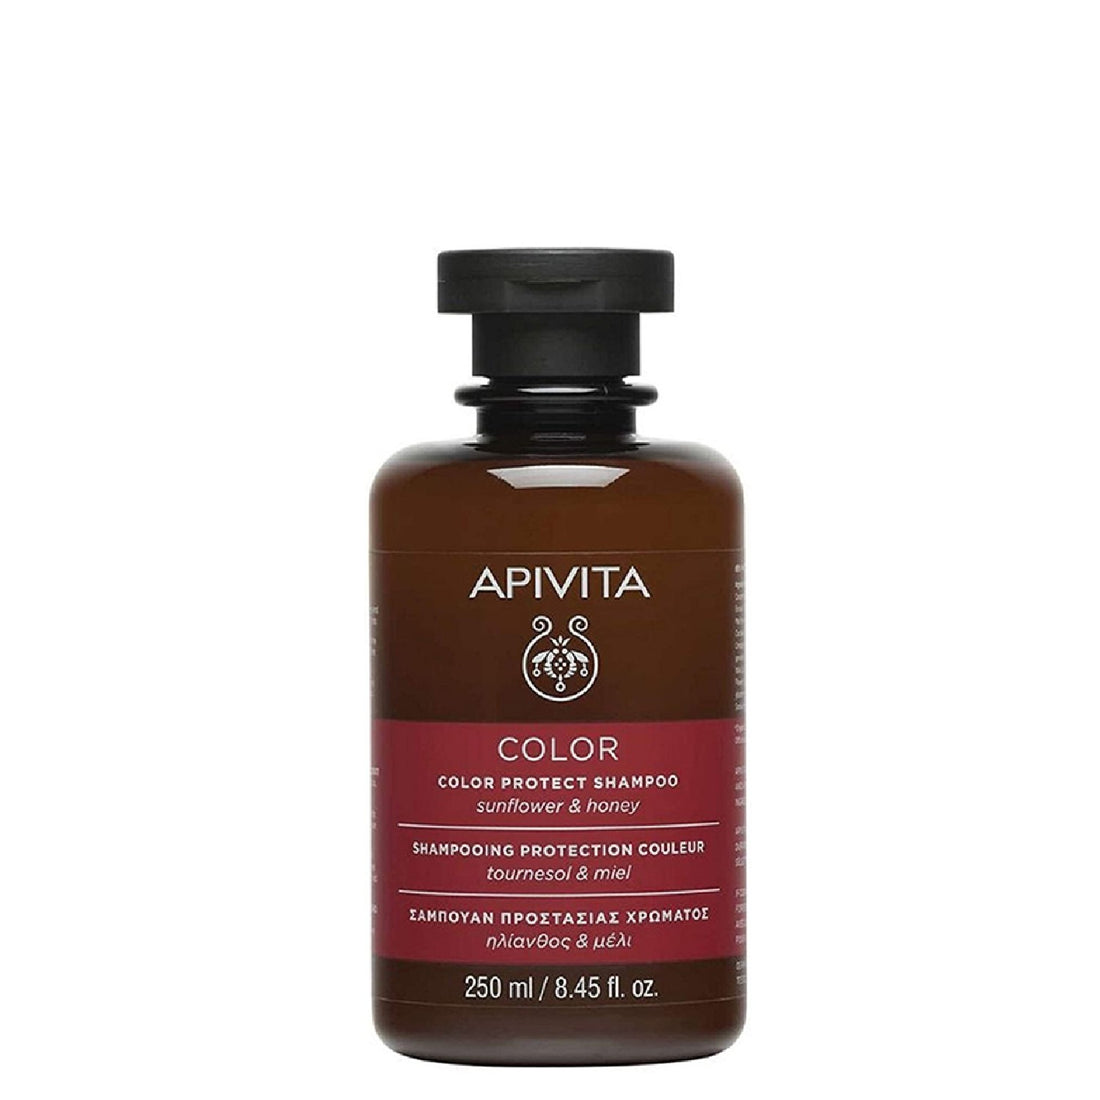 Apivita Color Protection Shampoo 250 ml